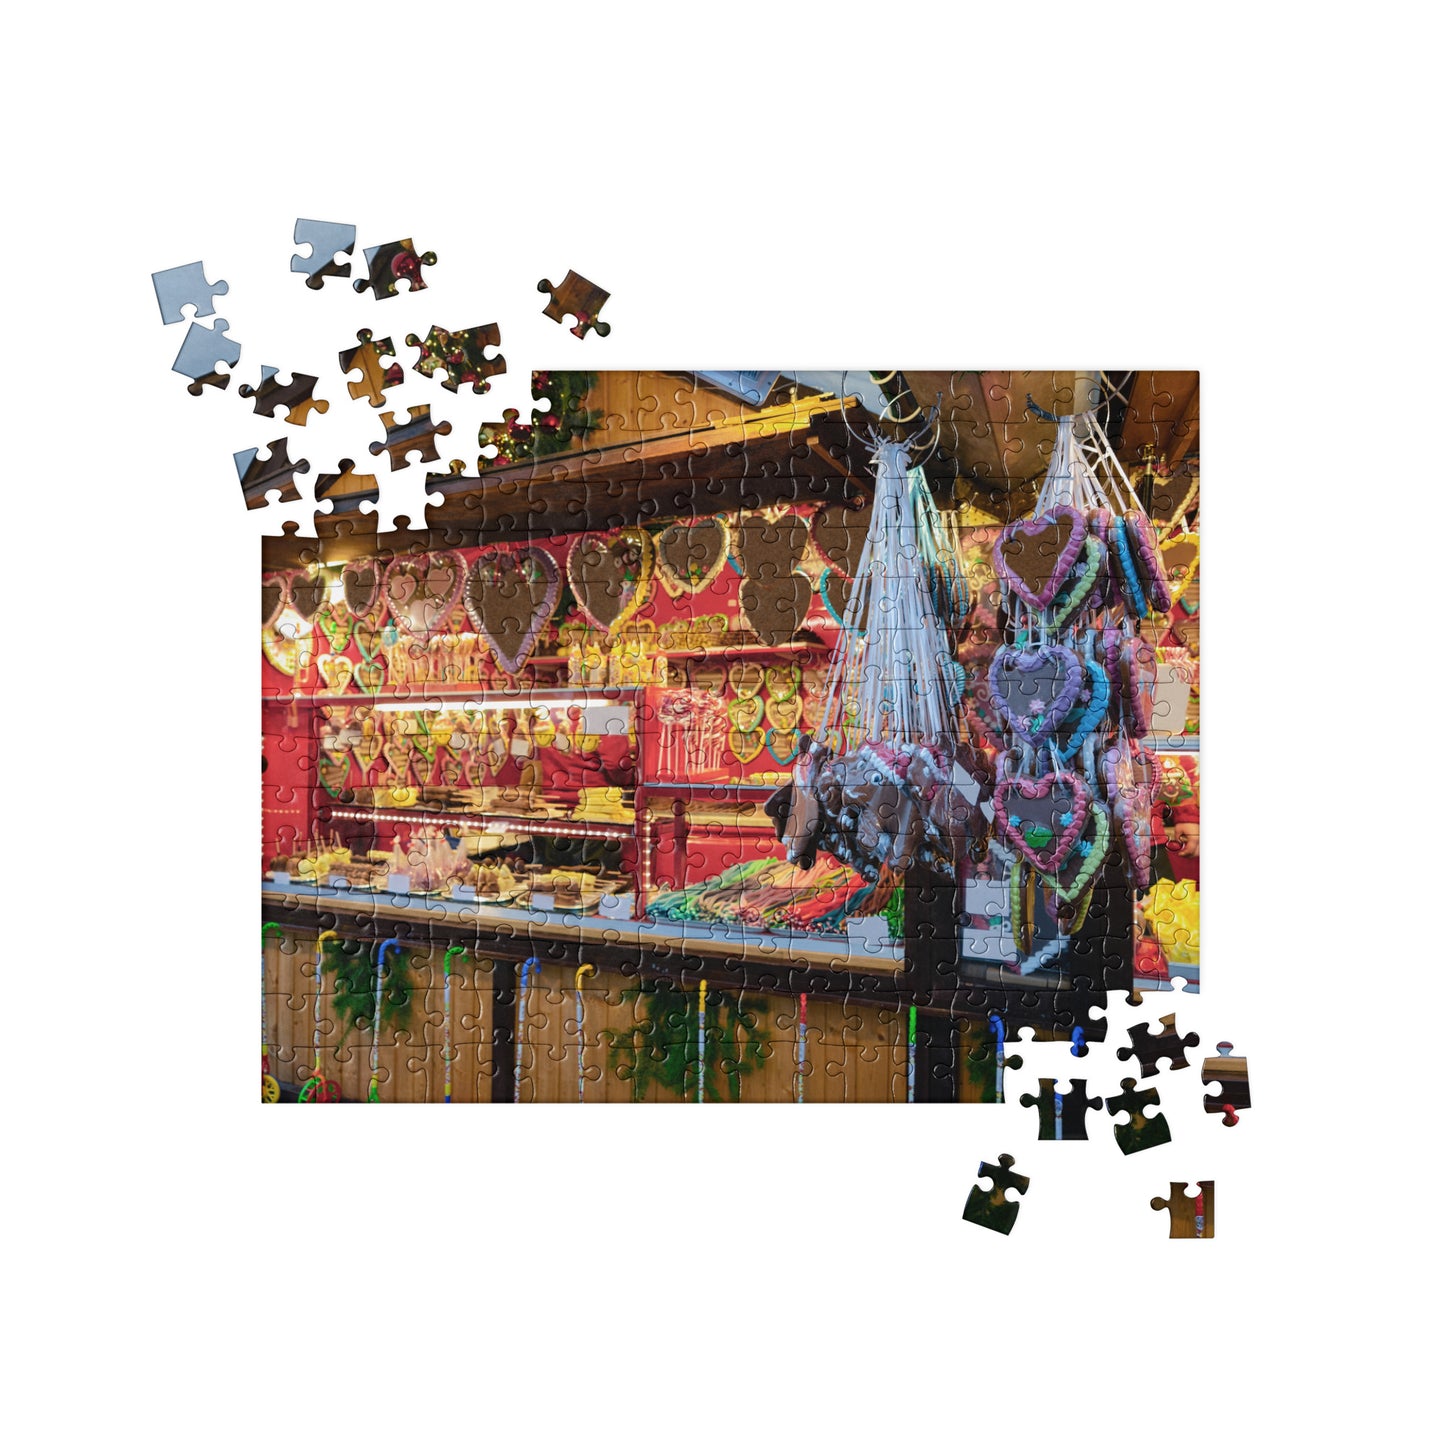 Winter Jigsaw Puzzle: Christmas Market / Christkindlmarkt